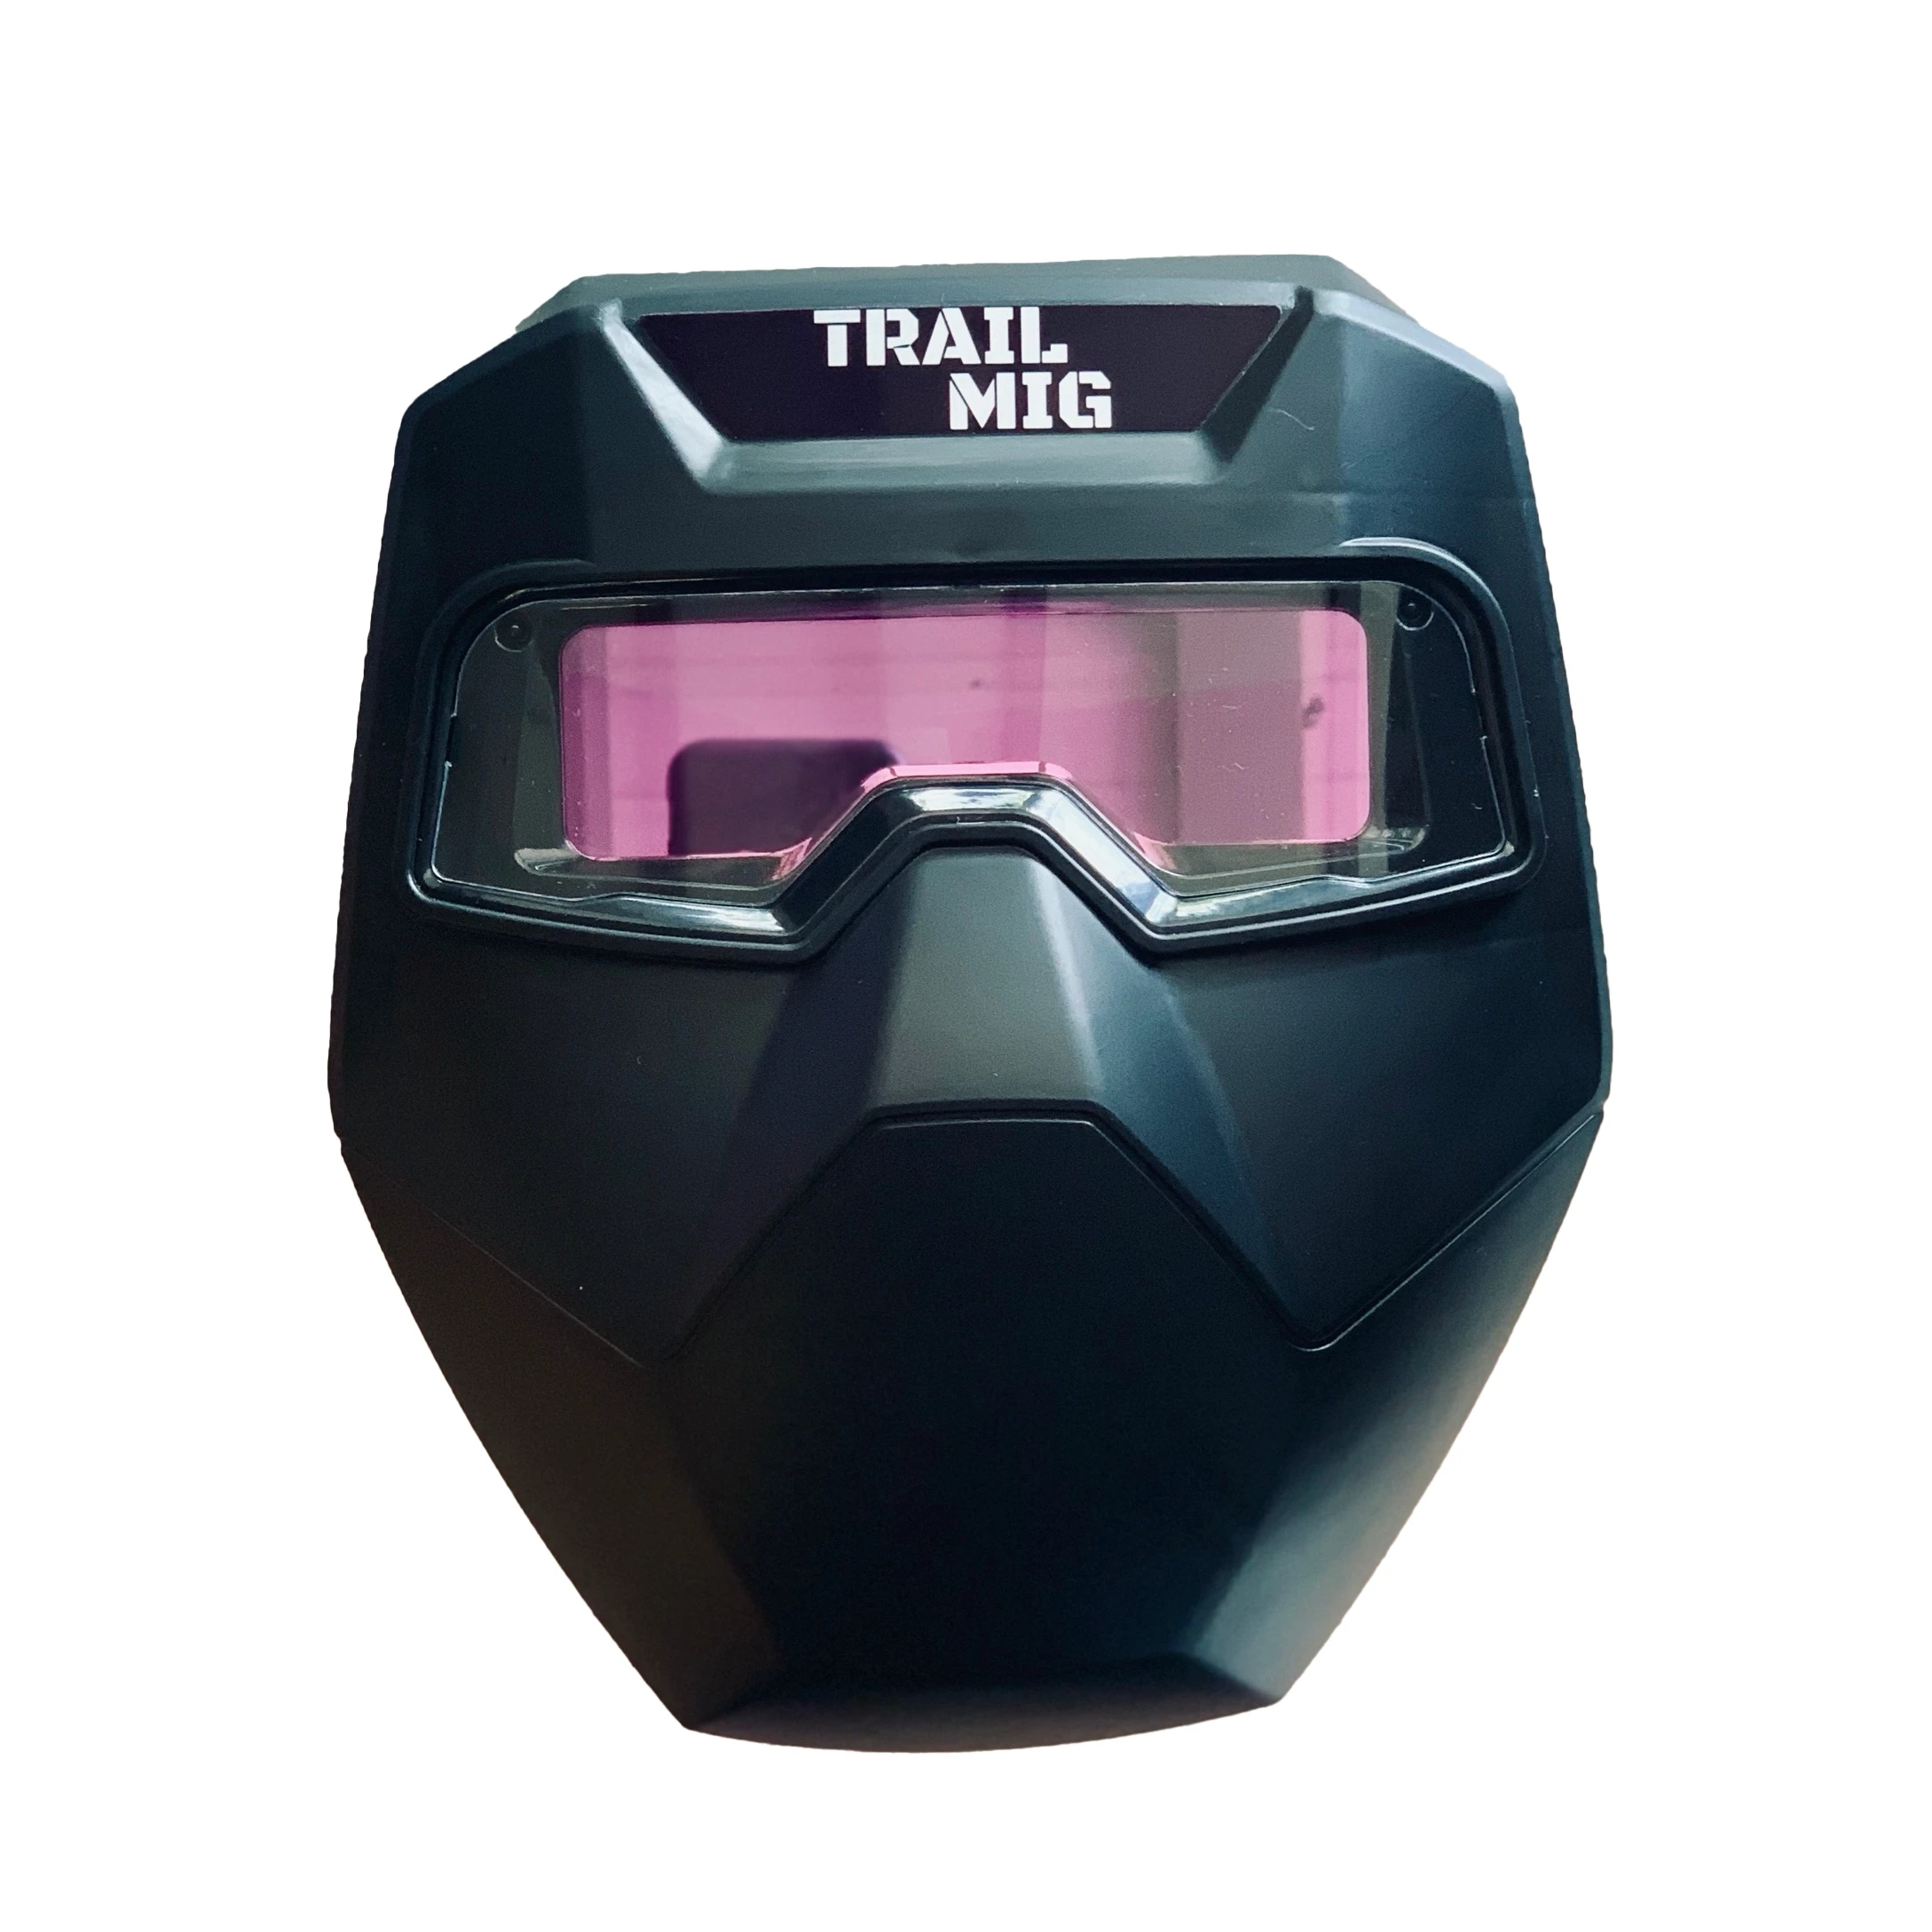 TRAILMASK Ultimate Series Portable Welding Mask